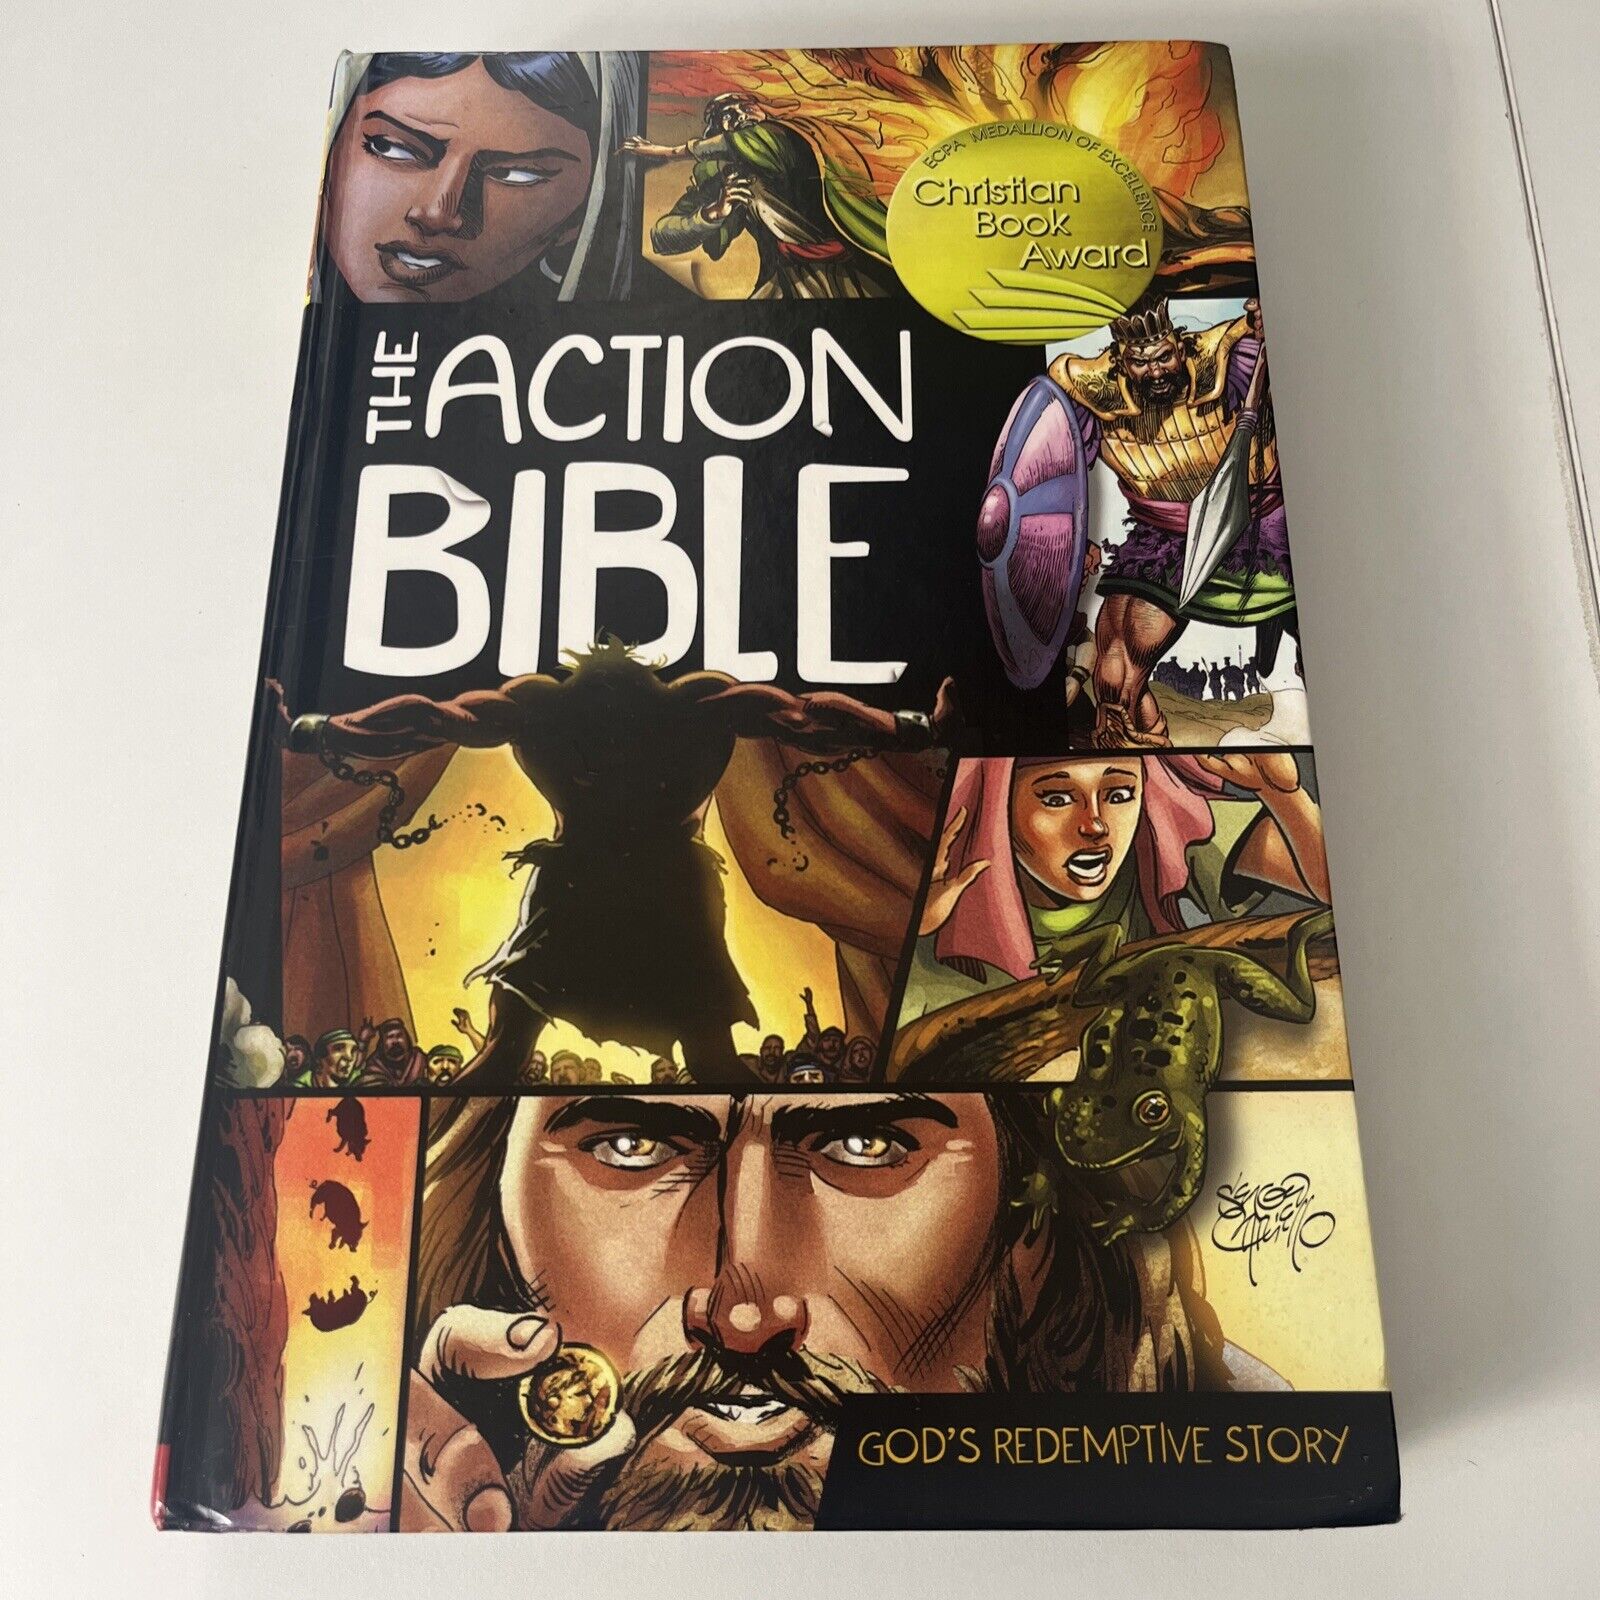 The Action Bible (David C. Cook, September 2010)